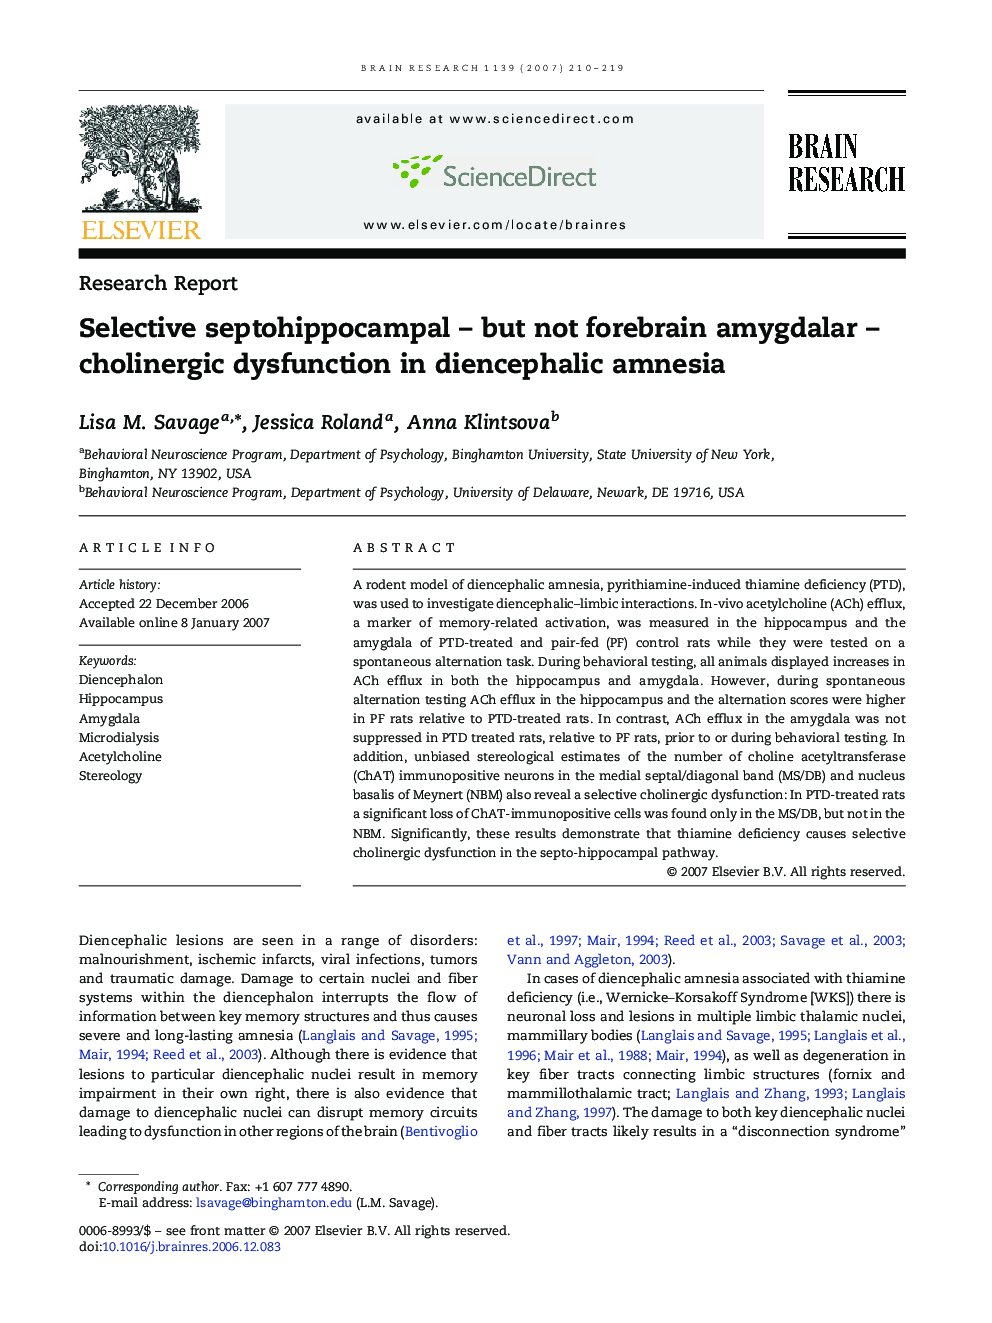 Selective septohippocampal – but not forebrain amygdalar – cholinergic dysfunction in diencephalic amnesia